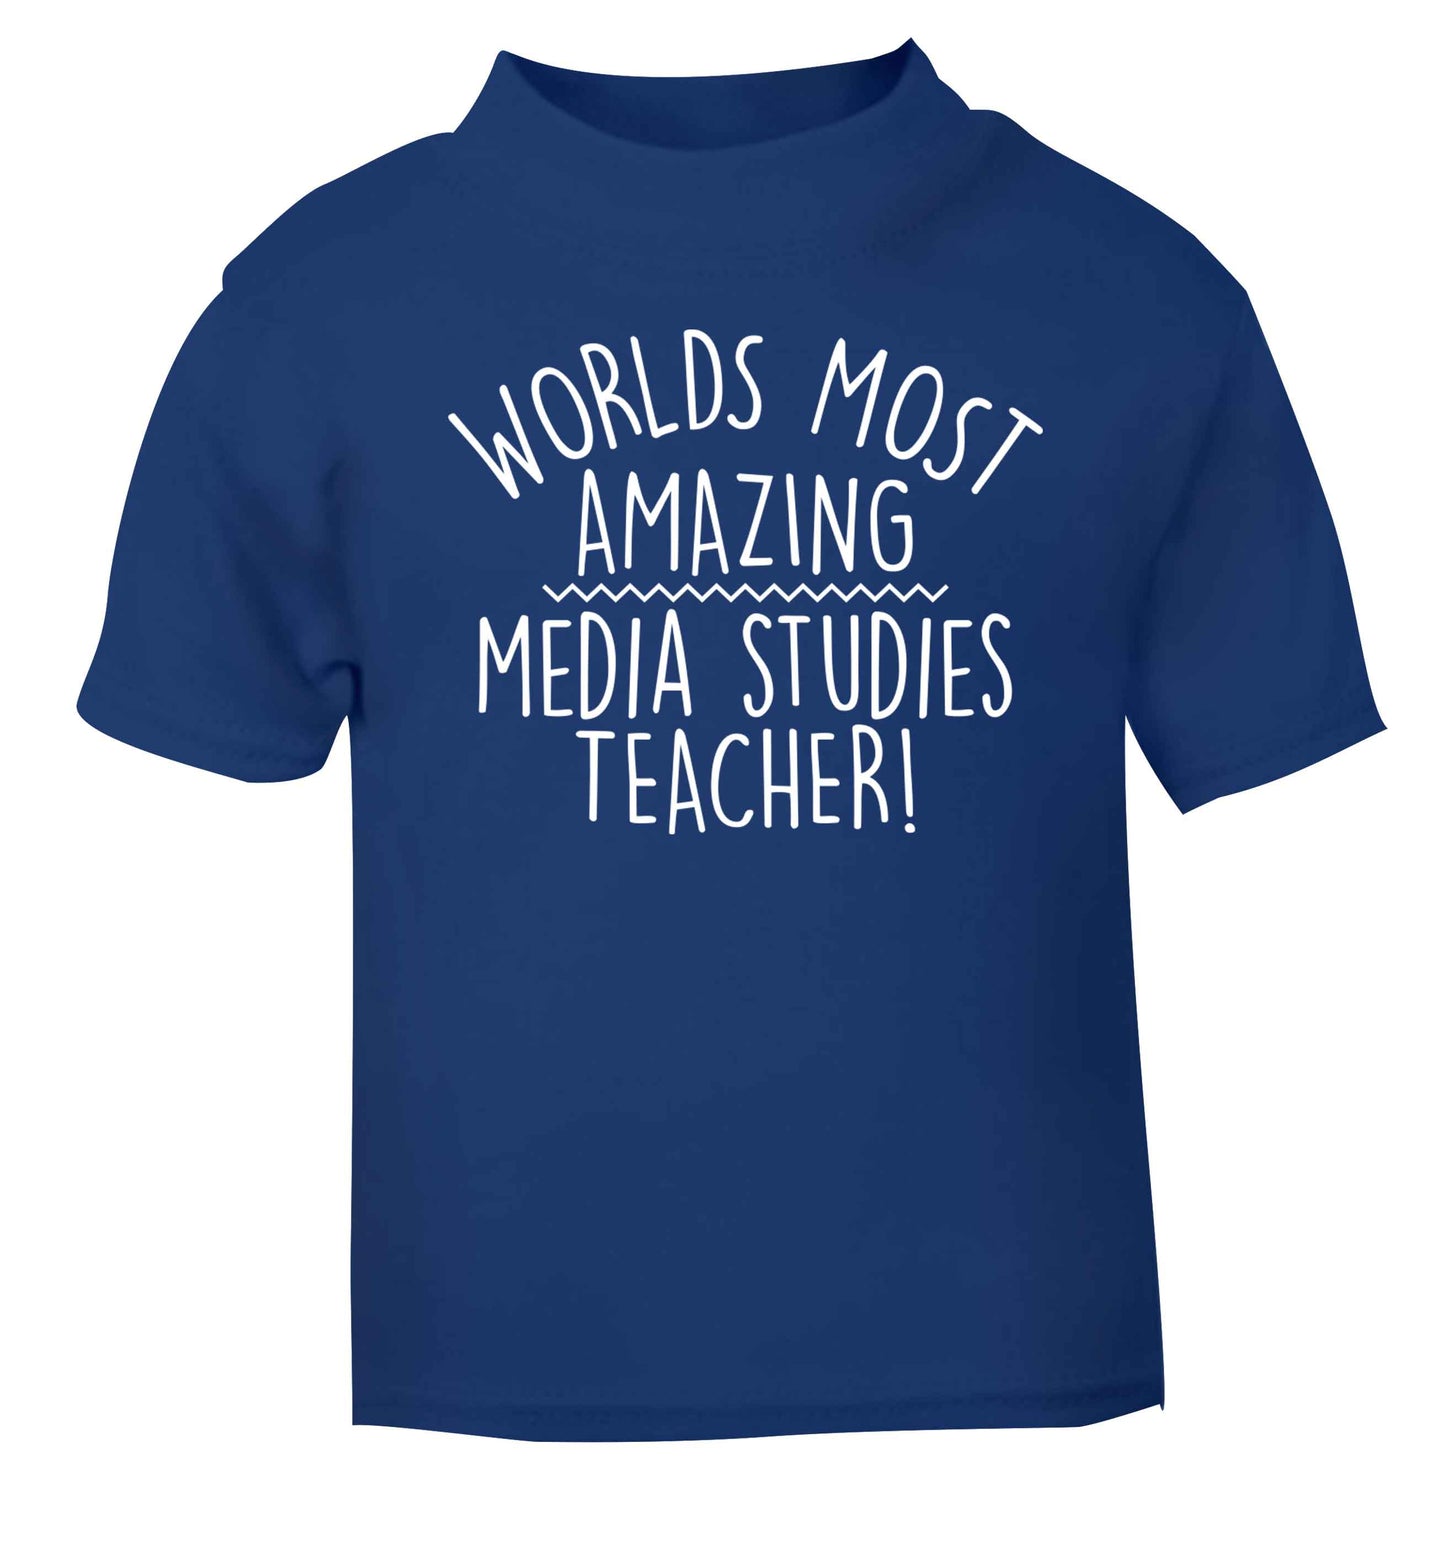 Worlds most amazing media studies teacher blue baby toddler Tshirt 2 Years